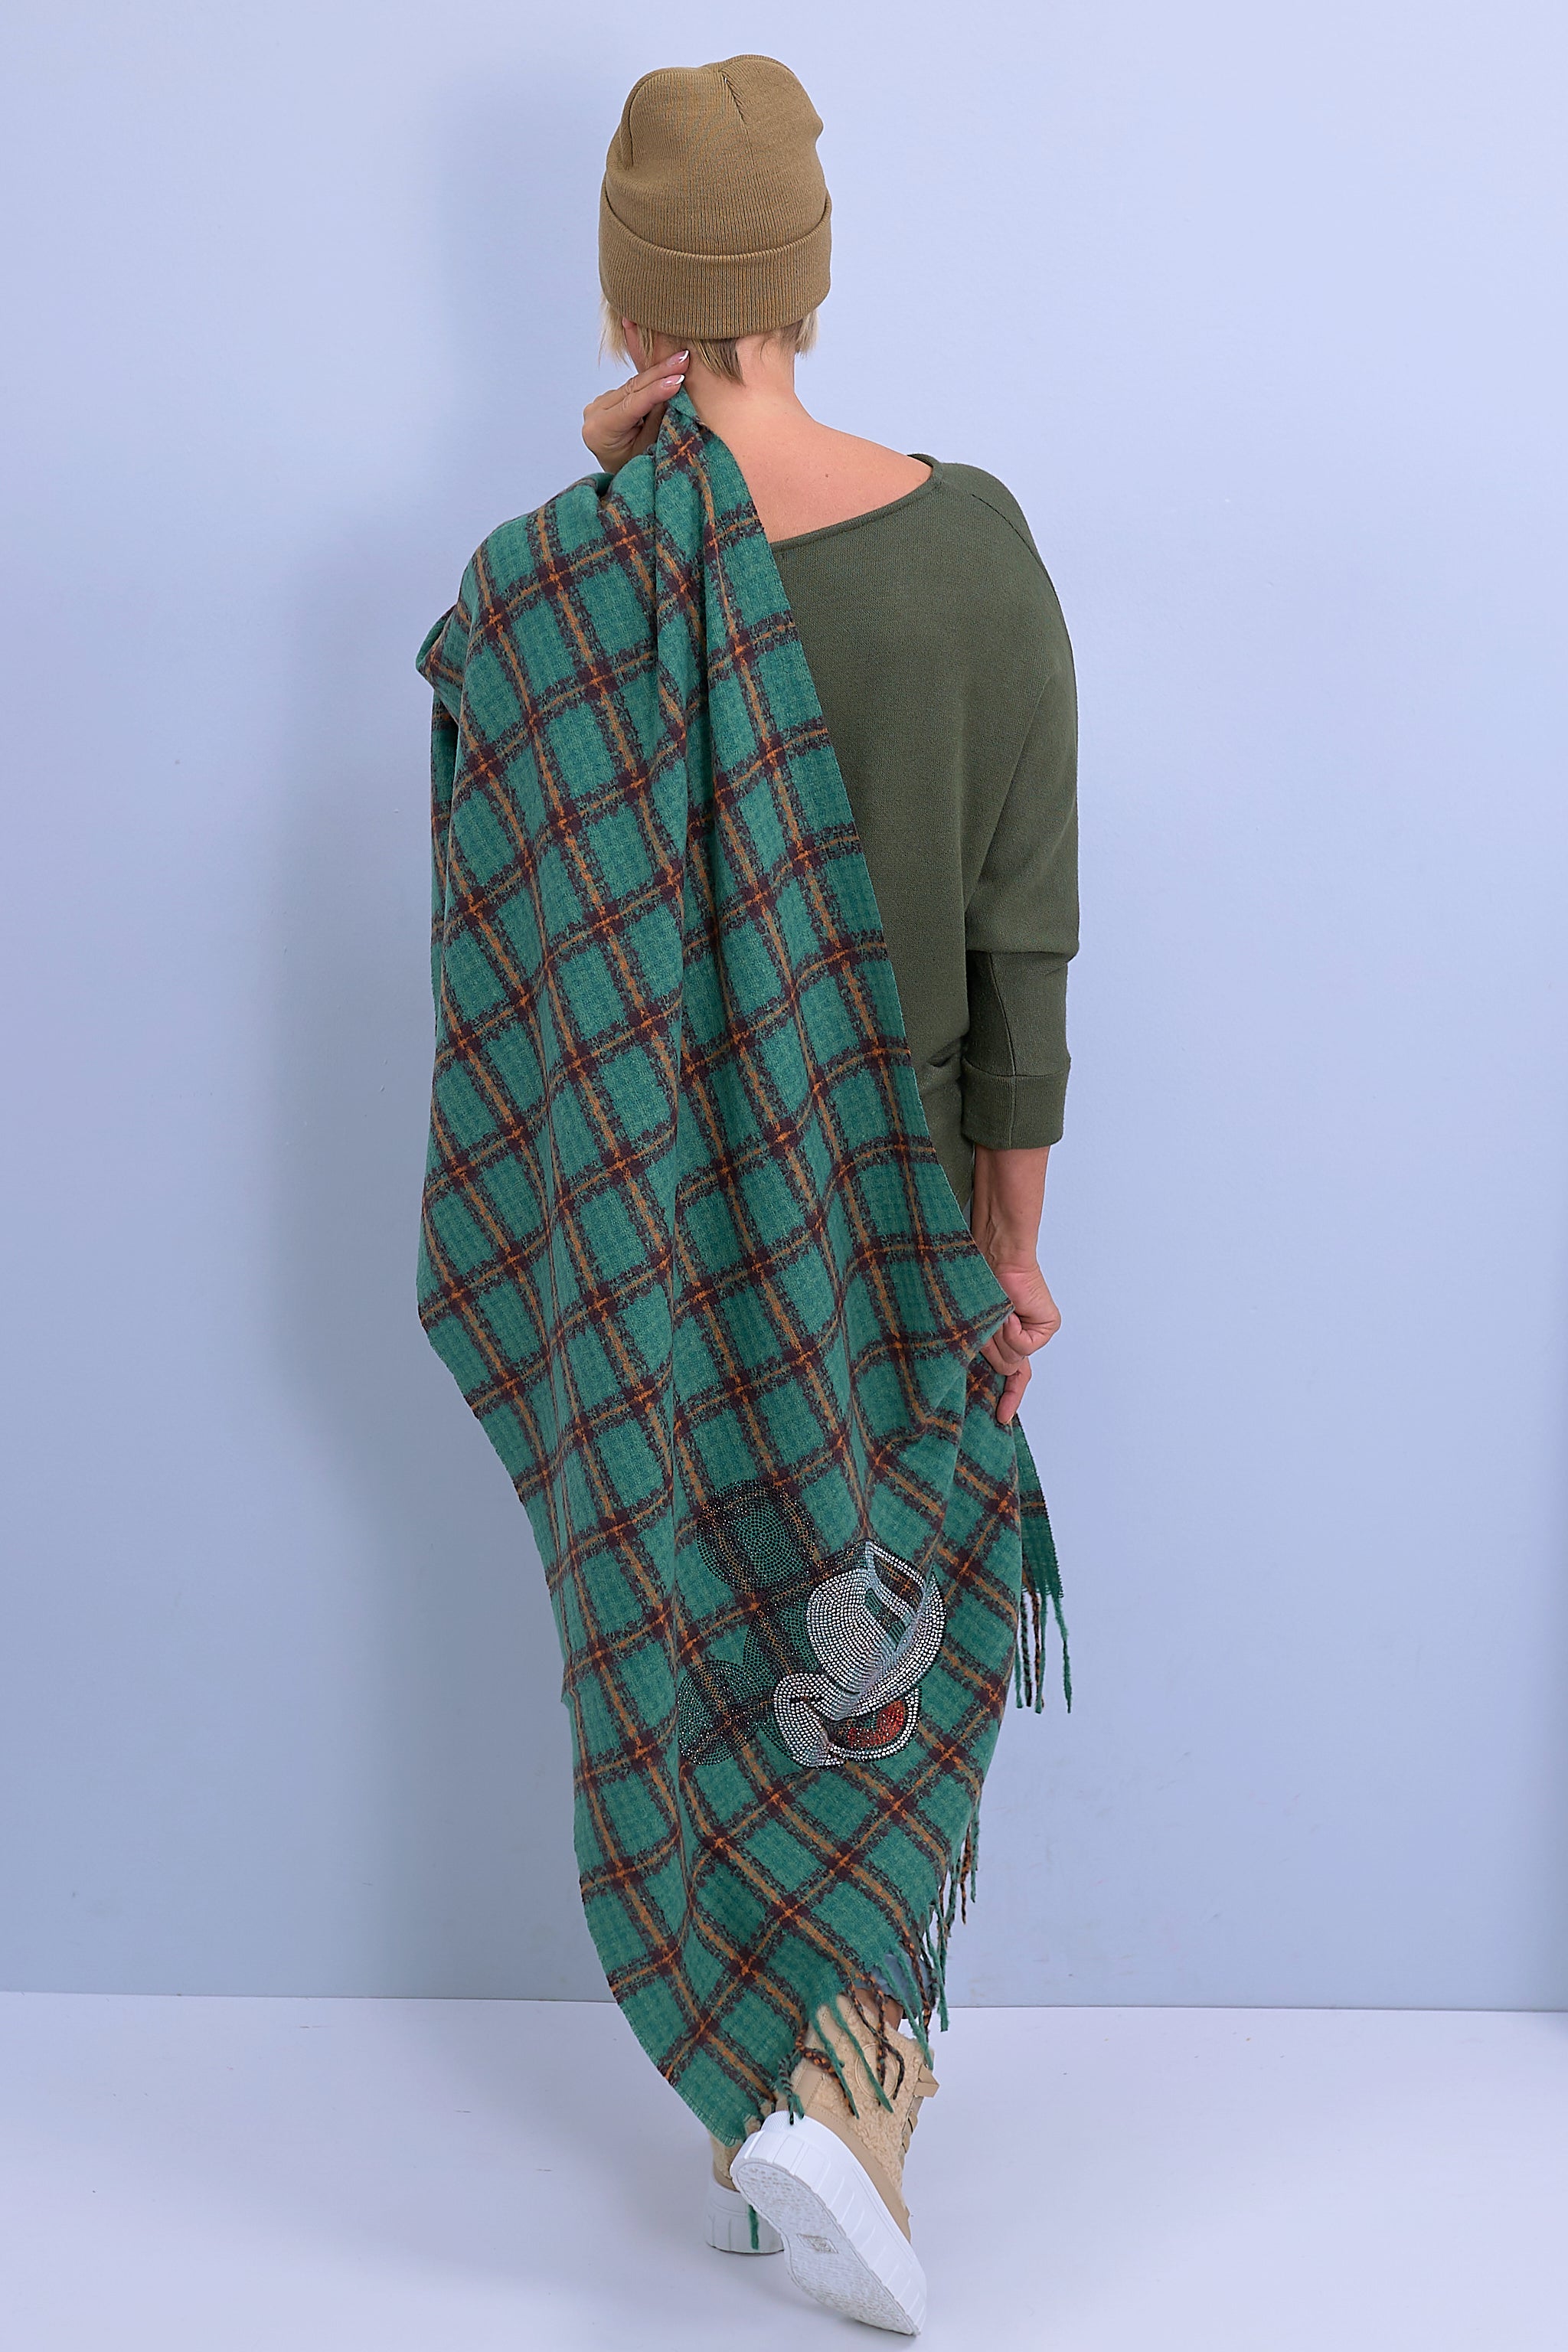 Soft scarf with rhinestone motif, green-checked